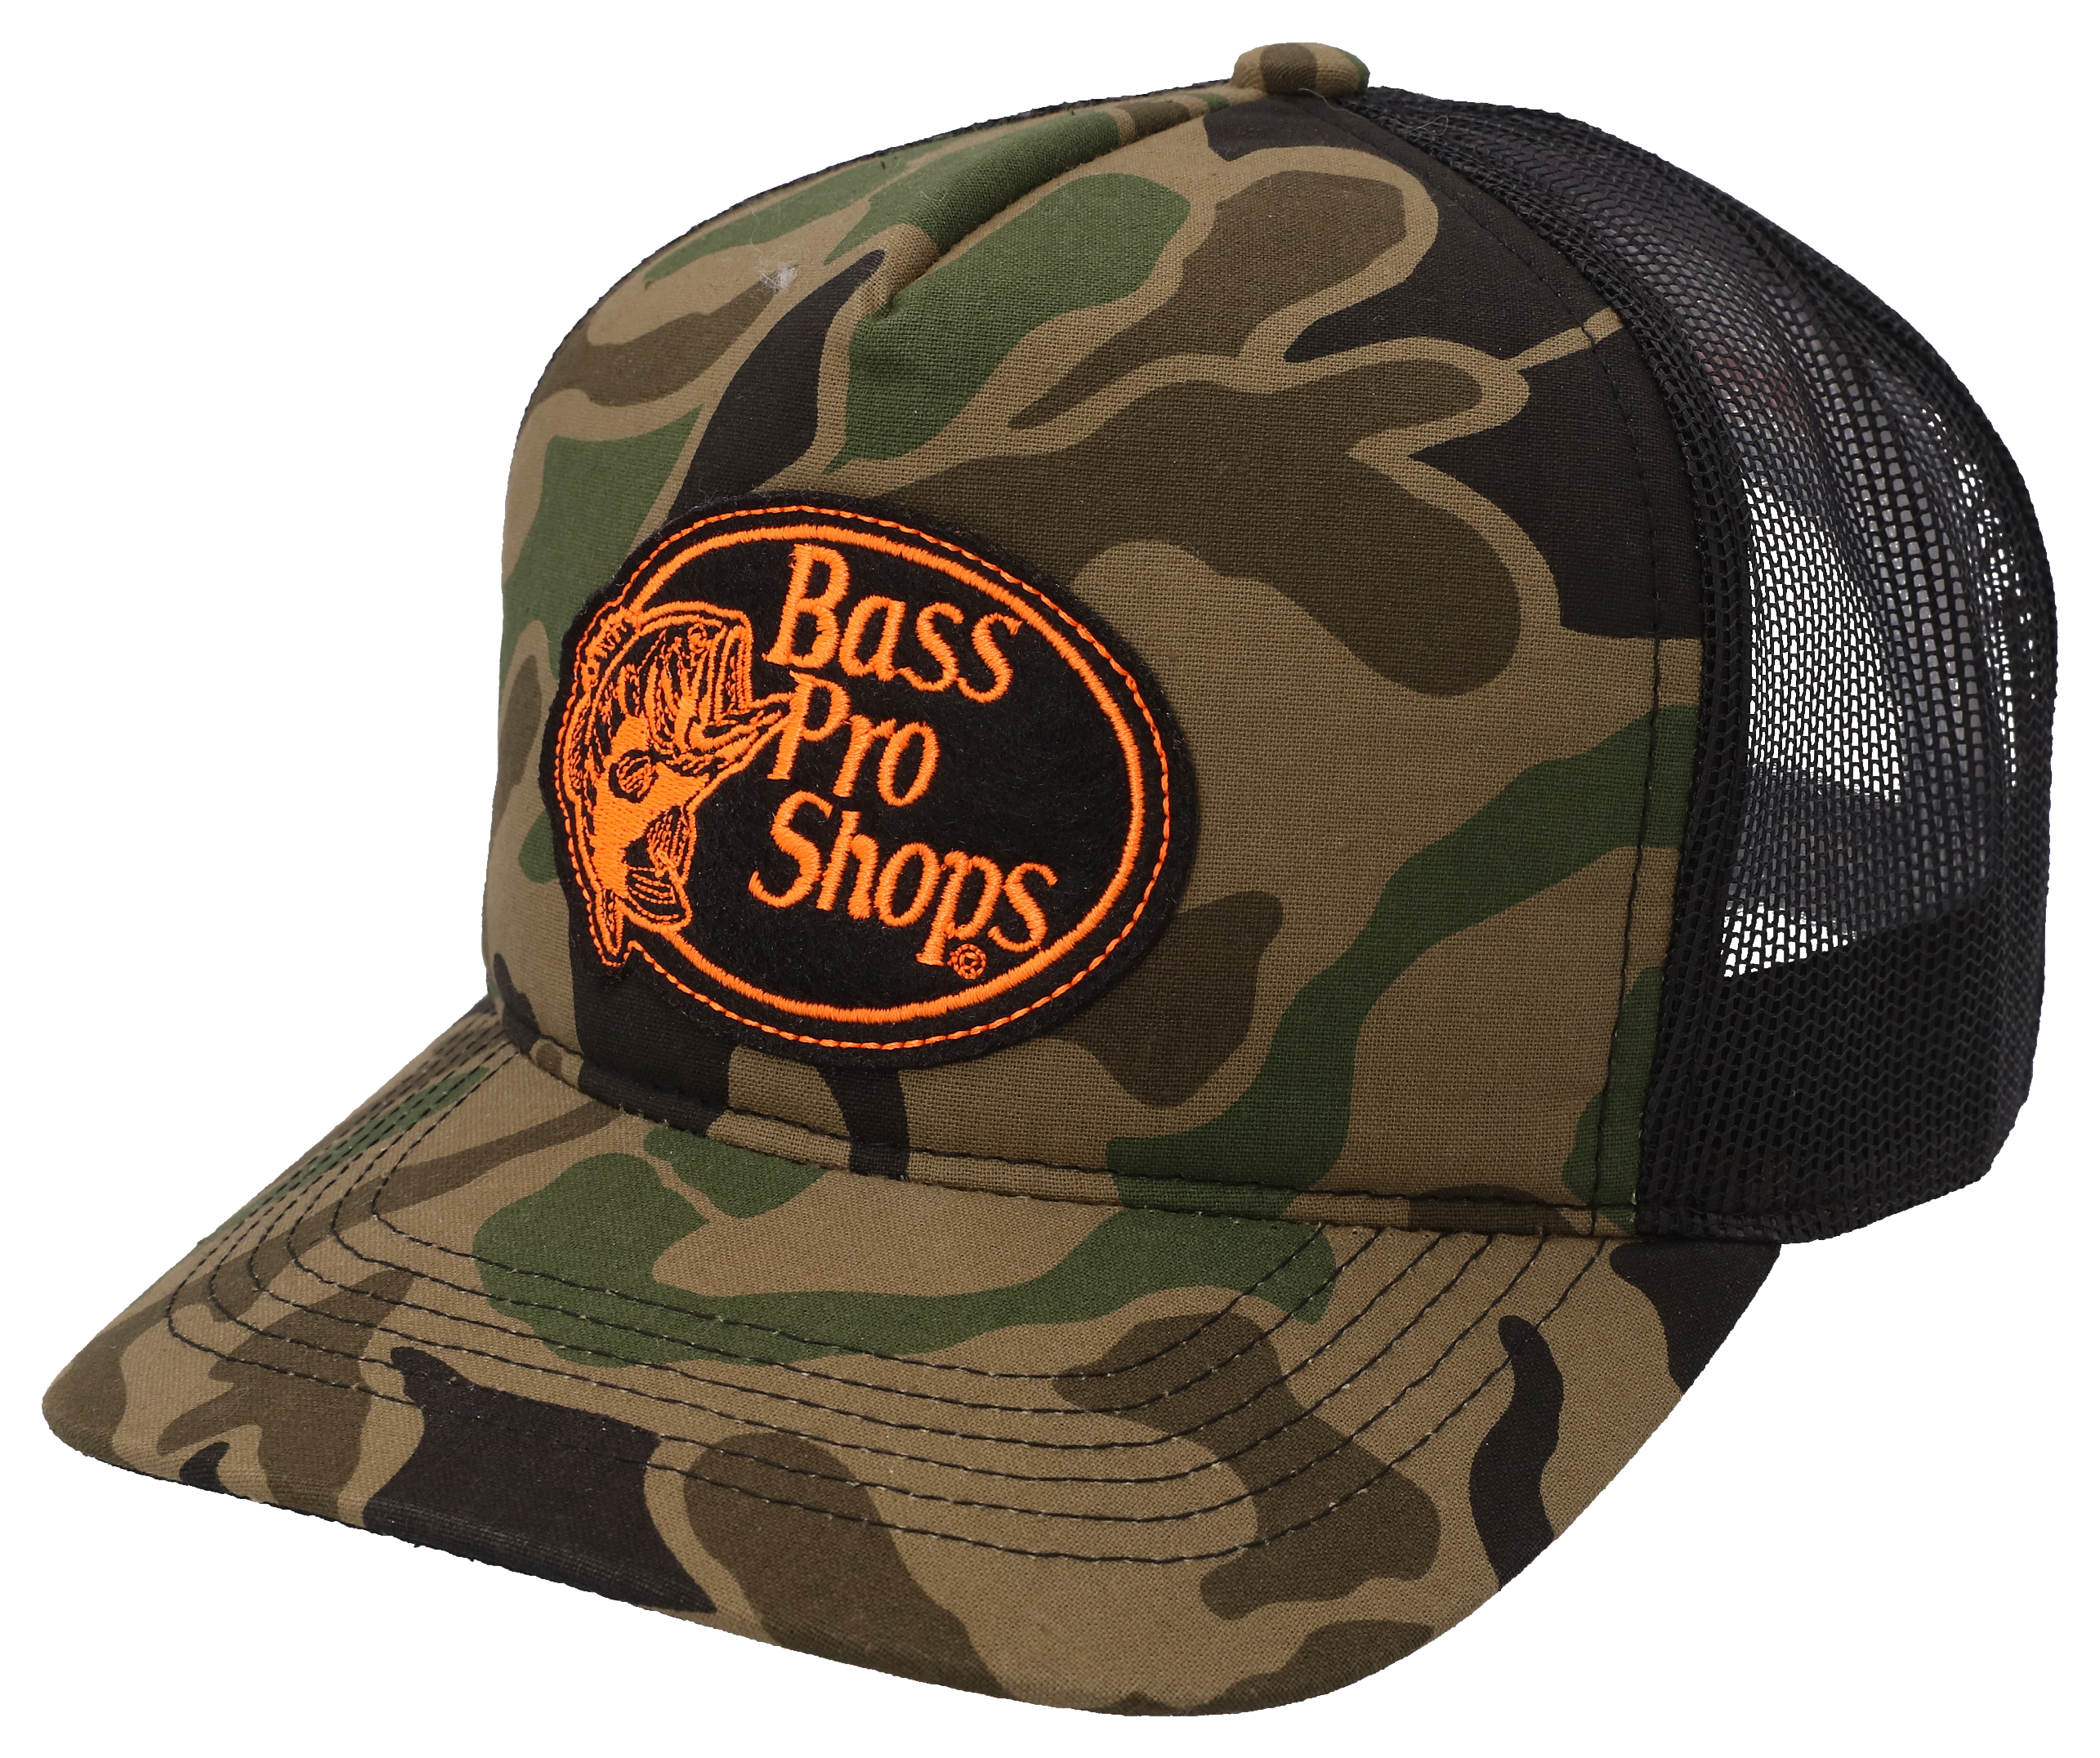 Bass Pro Shops Stitched Embroidered Vintage Snapback Trucker Hat